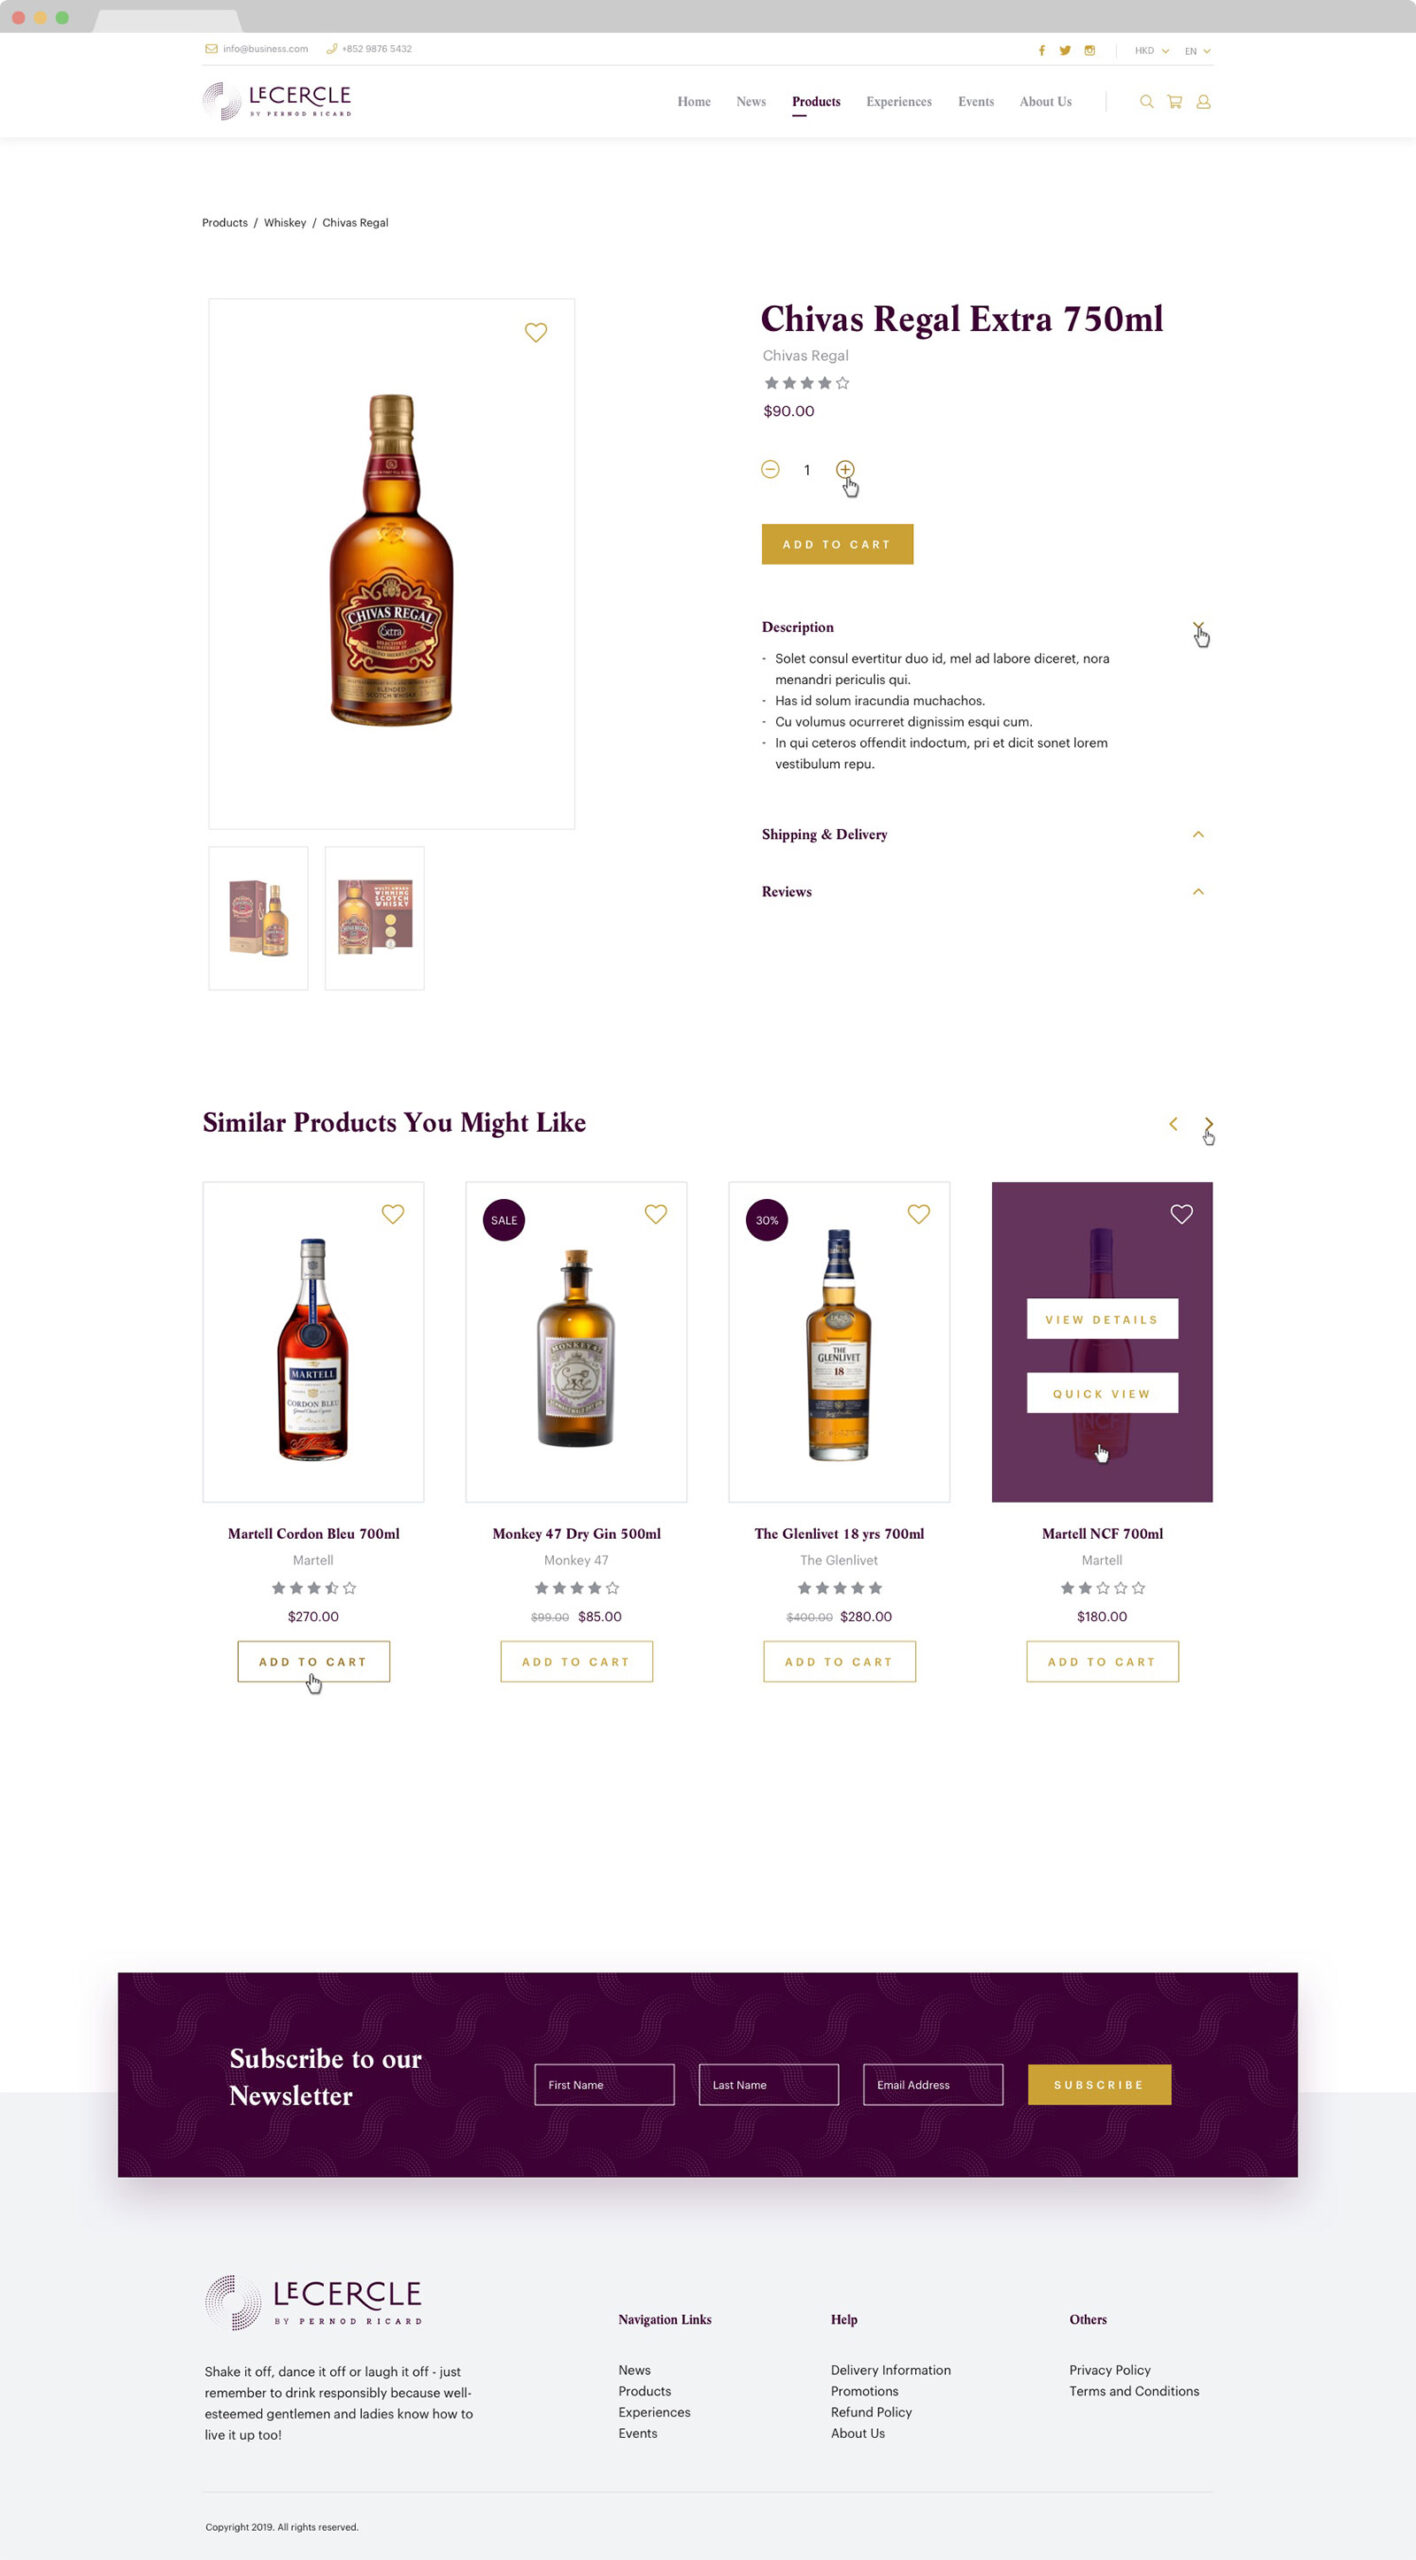 e commerce singapore pernod ricard 03 scaled - Pernod Ricard